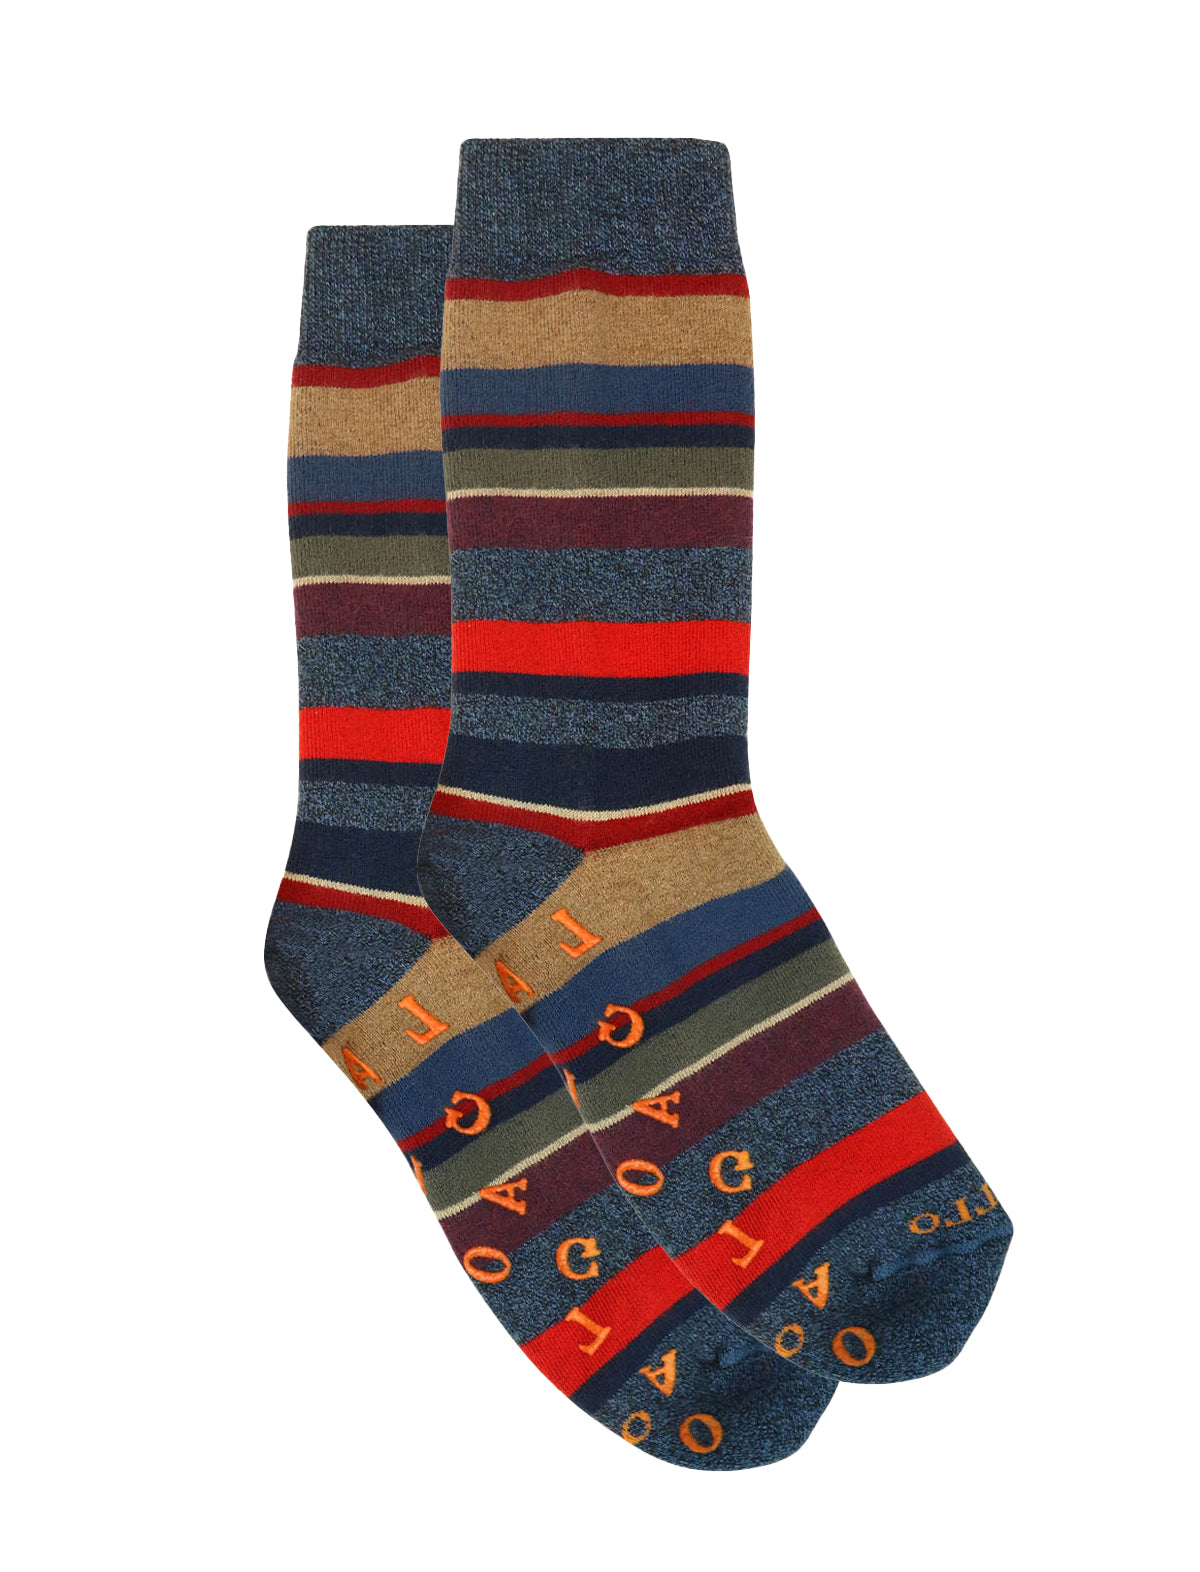 Gallo Socks in Navy w/ Multi-Coloured Striped Print